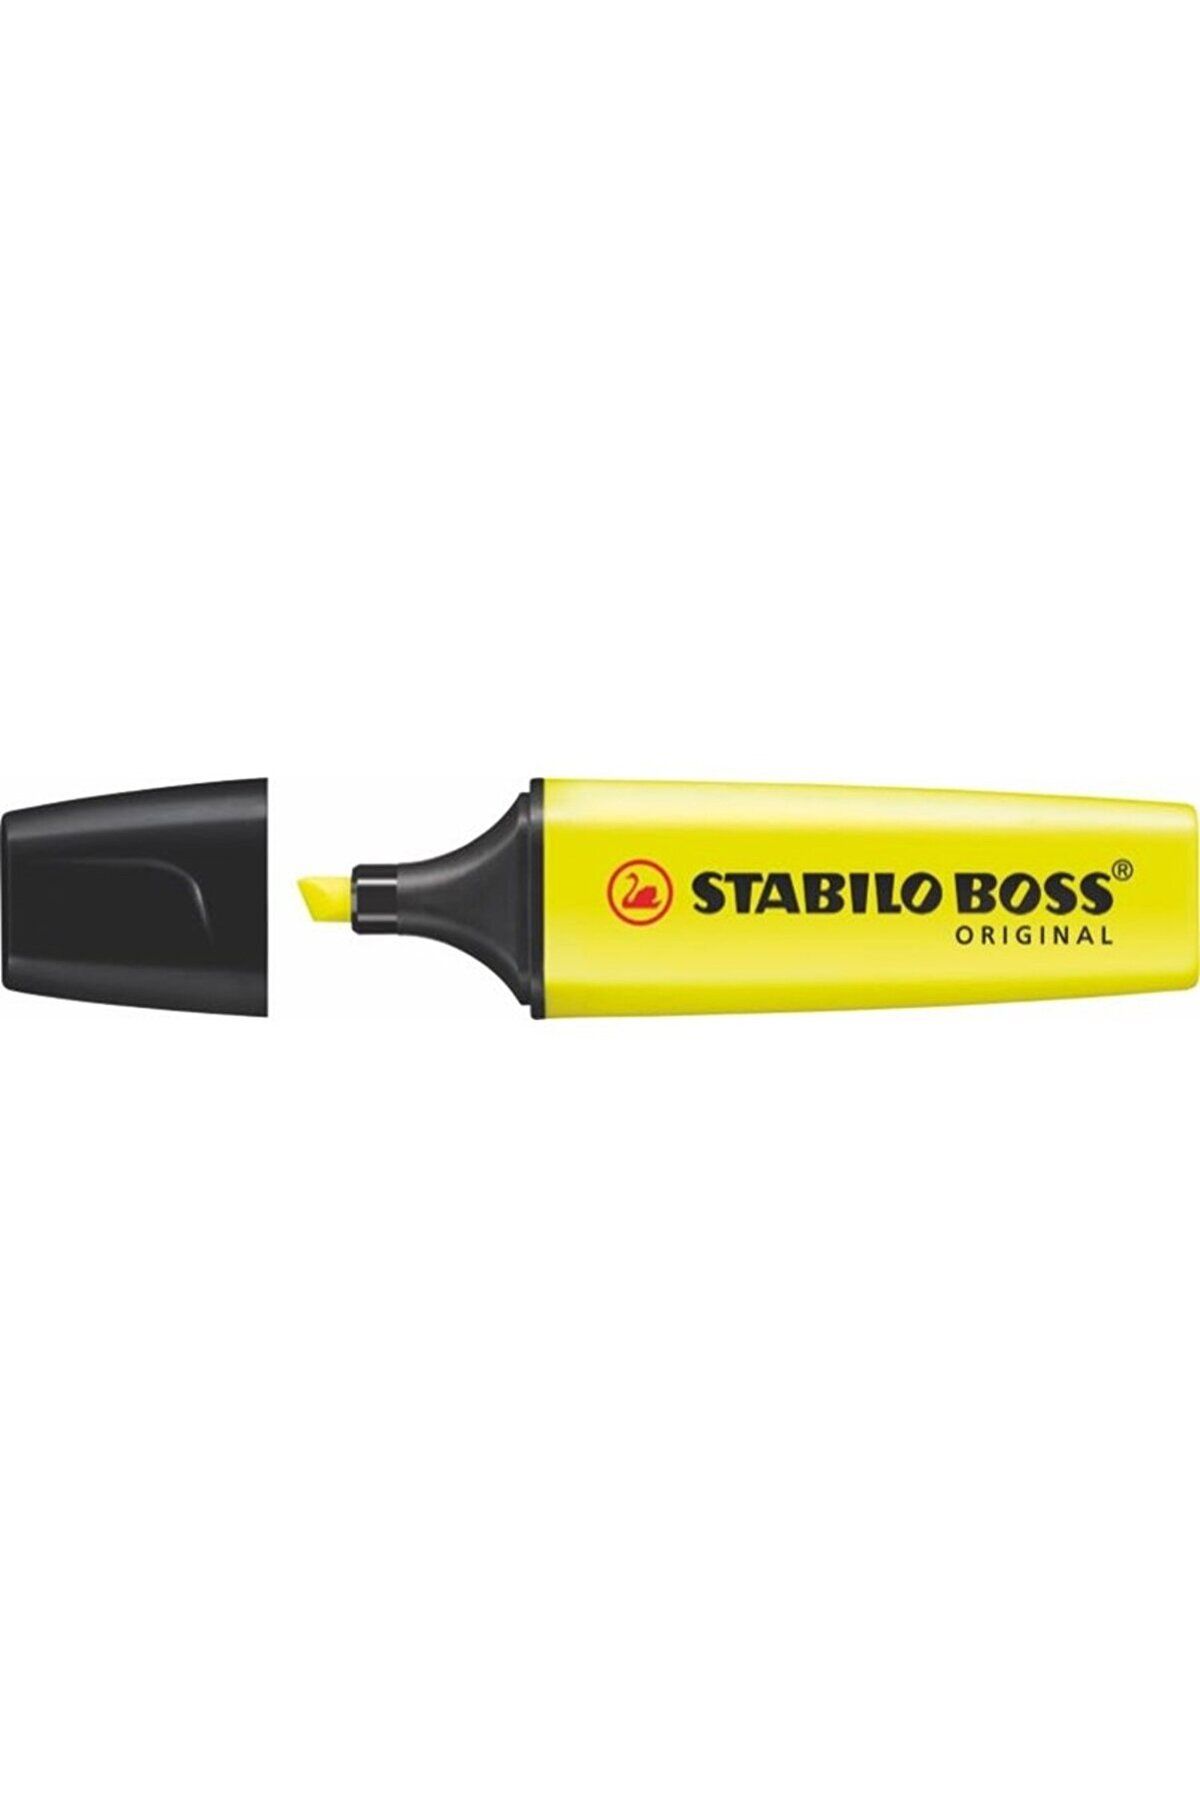 Stabilo Boss Orıgınal - Sarı